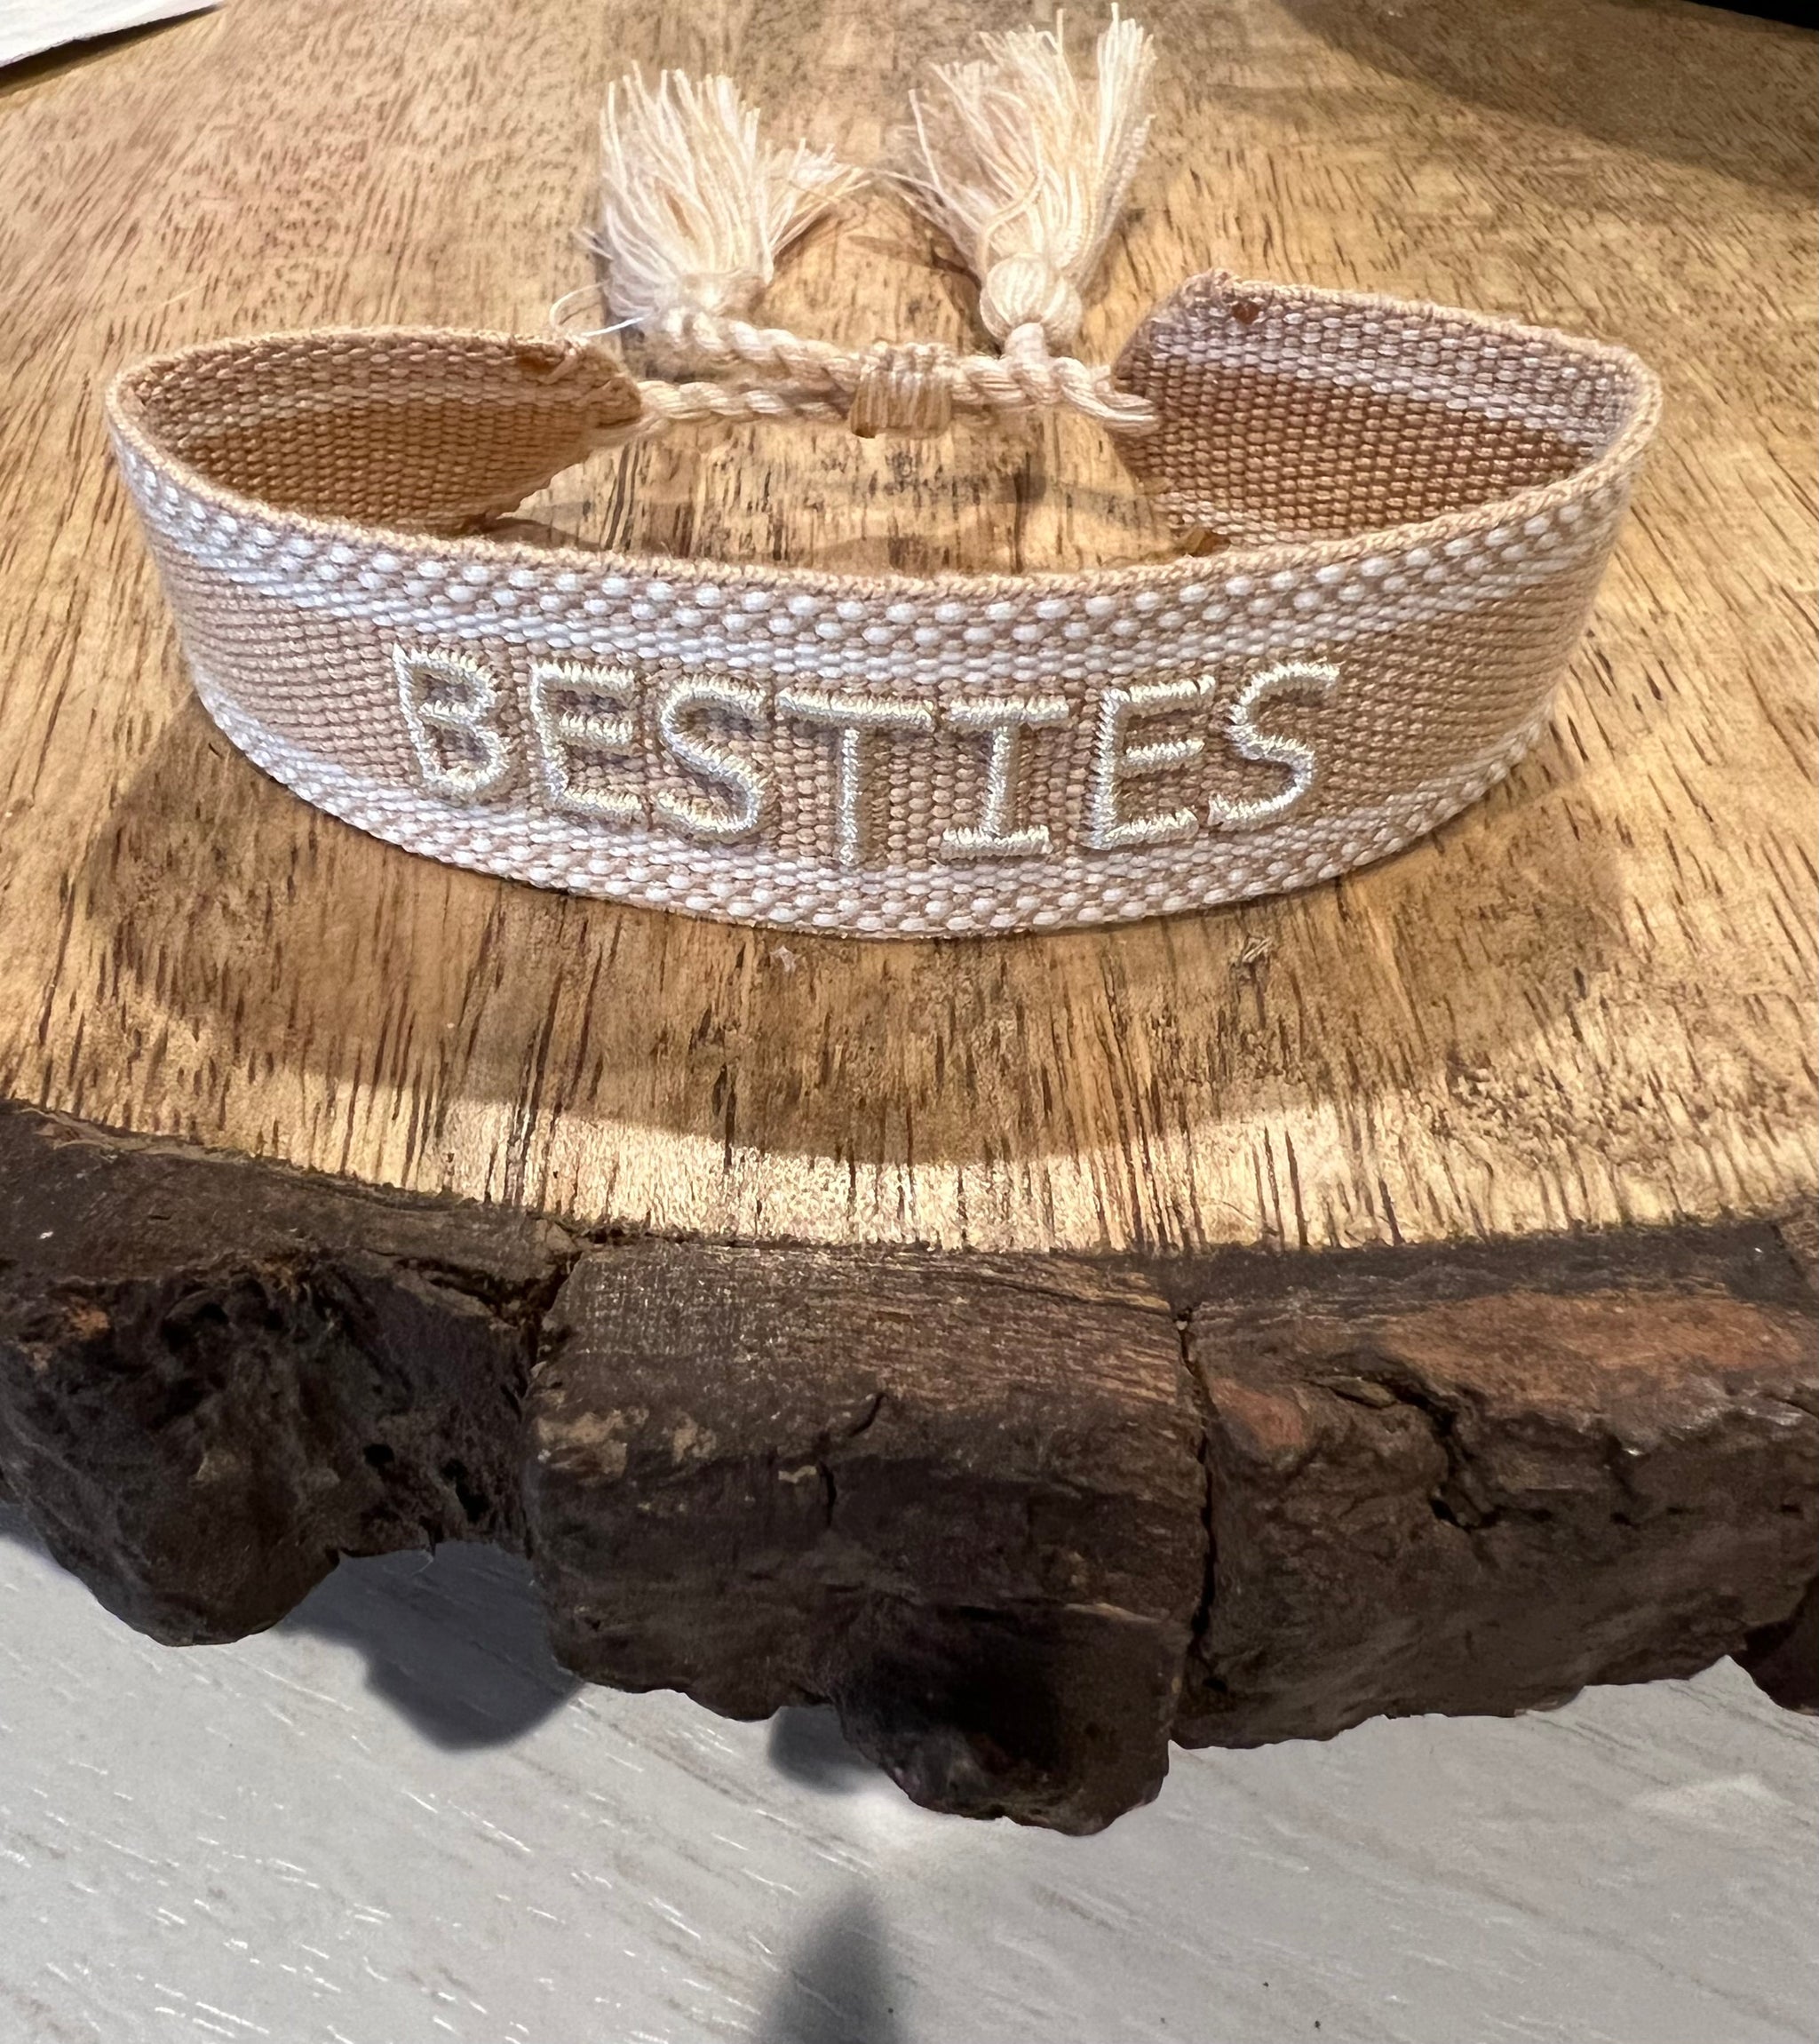 “Besties” Embroidered Friendship Bracelet